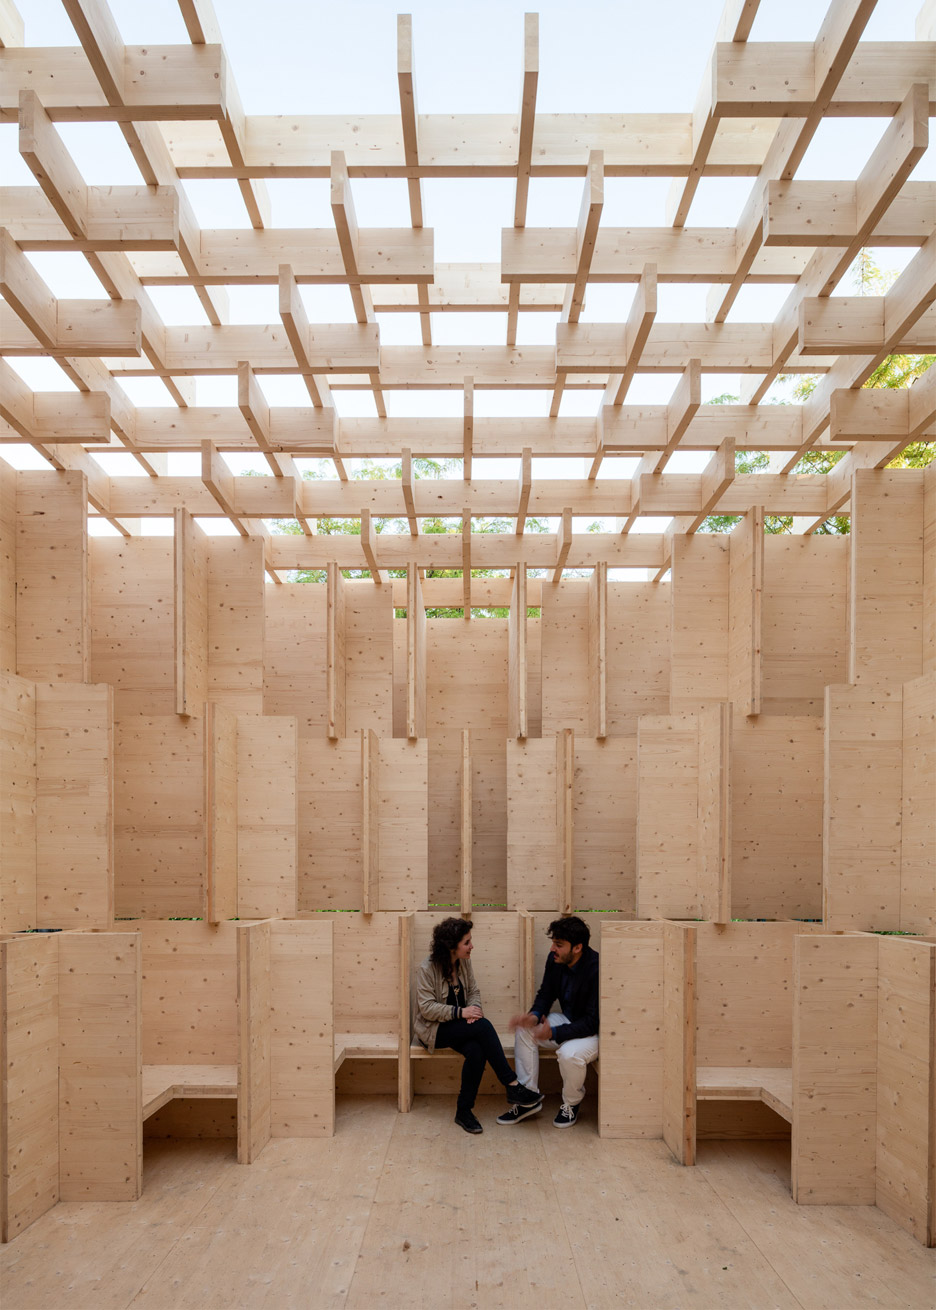 Kjellander + Sjöberg Forest of Venice installation at the Venice Architectural Biennale 2016